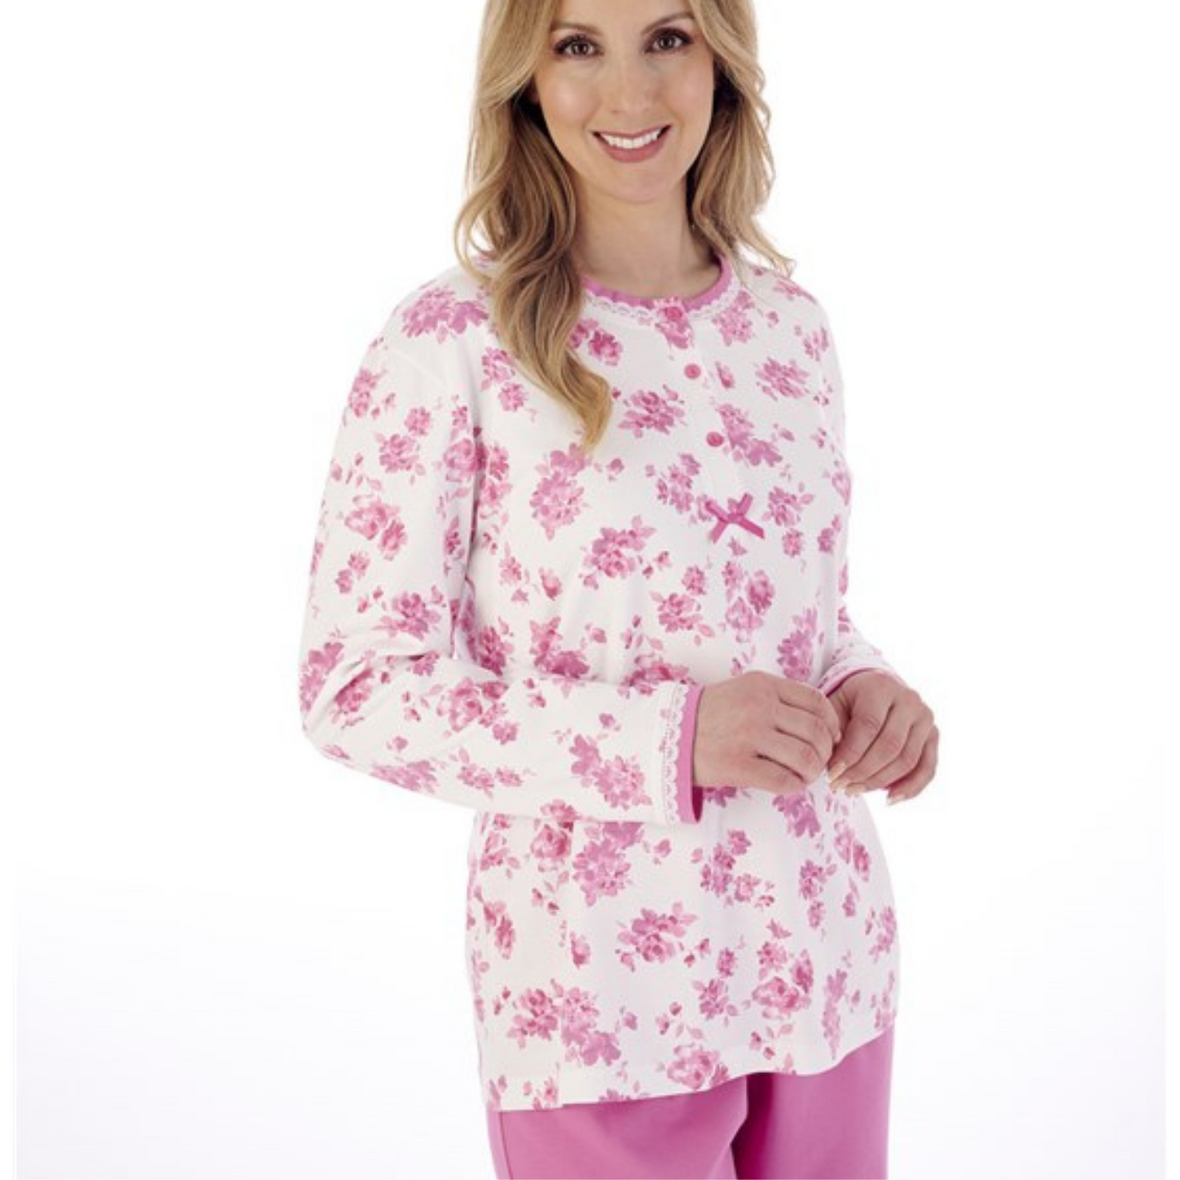 Slenderella Floral Print & Plain Pyjama